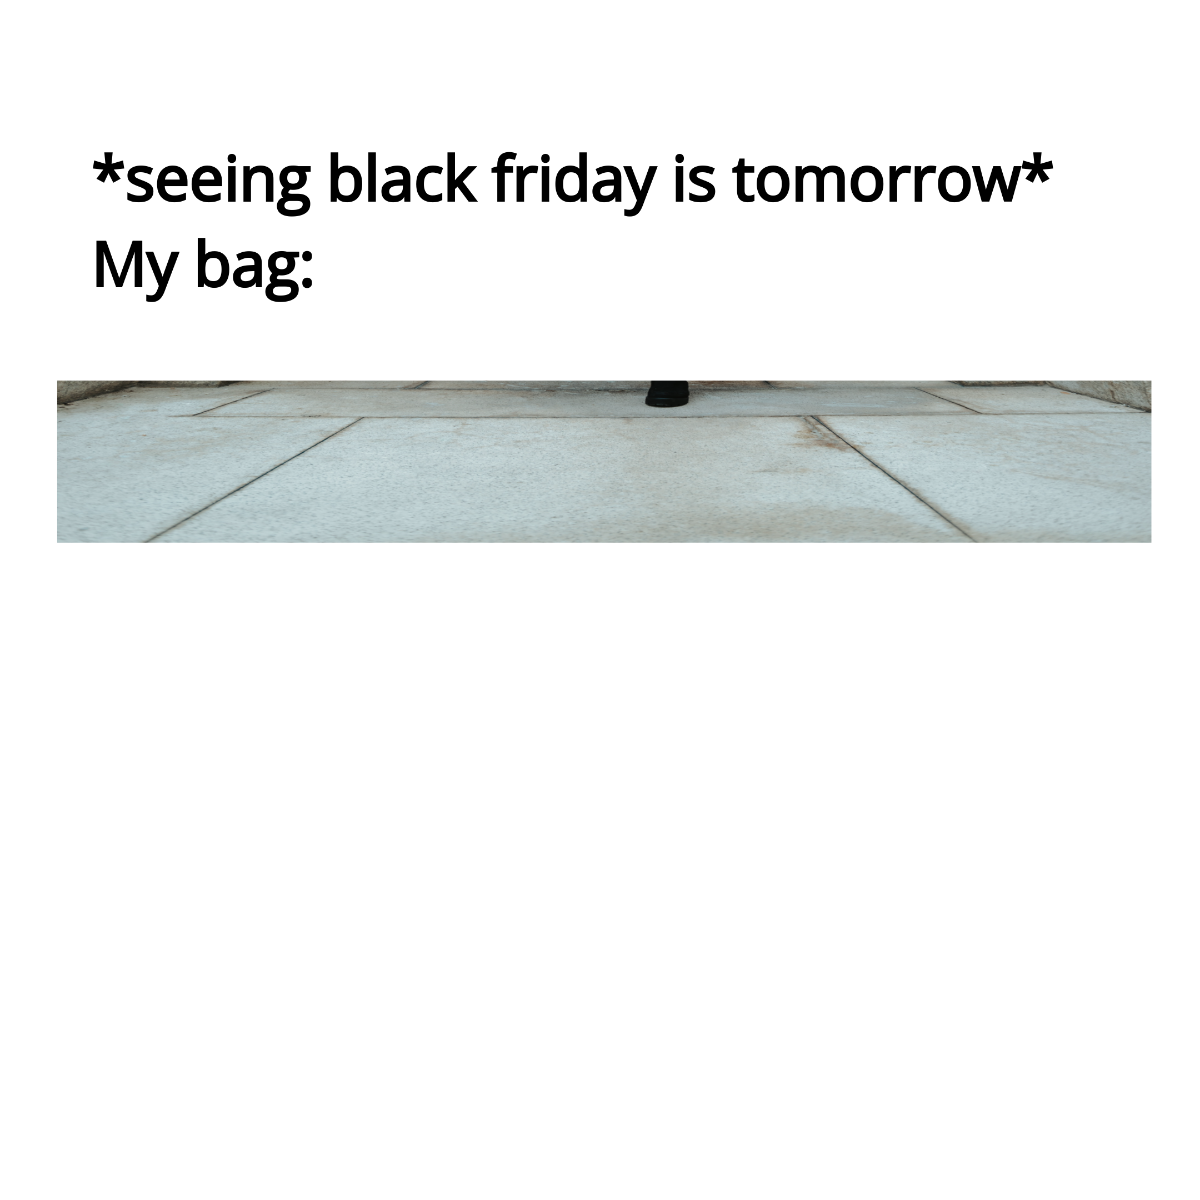 Free The Best Black Friday Meme